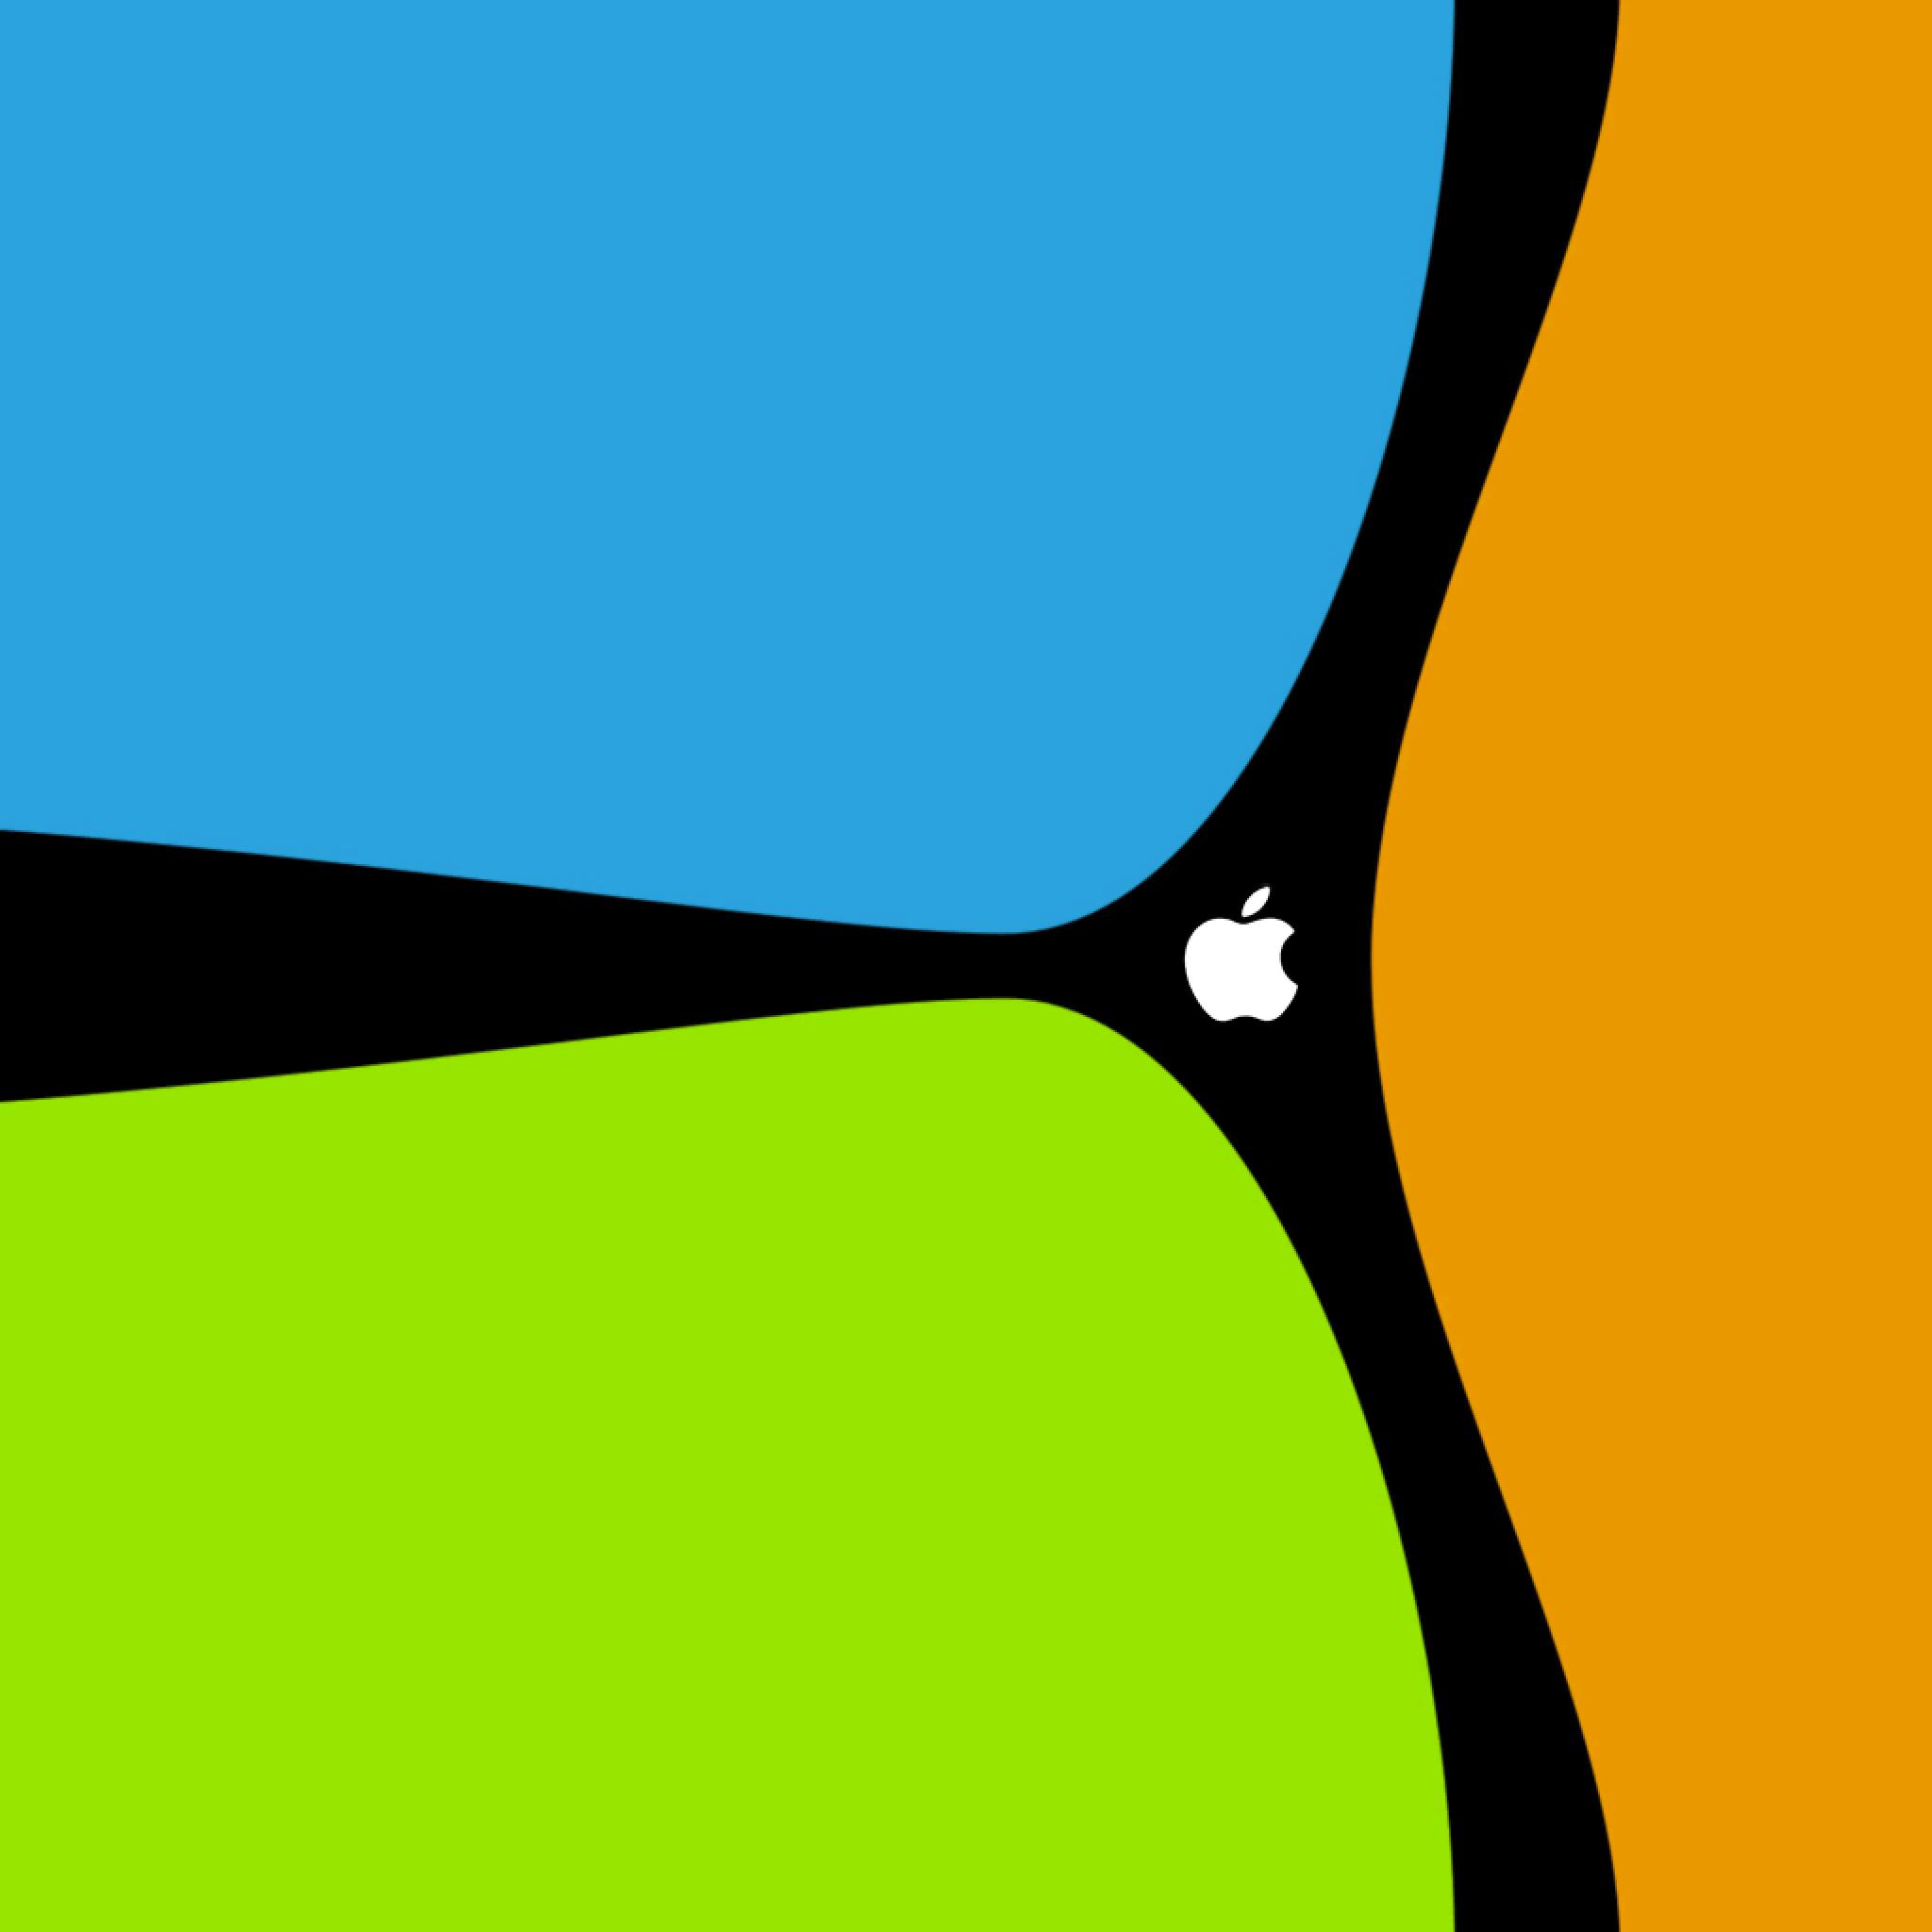  Tri Colour Joyful Apple Logo   iPad iPhone HD Wallpaper Free